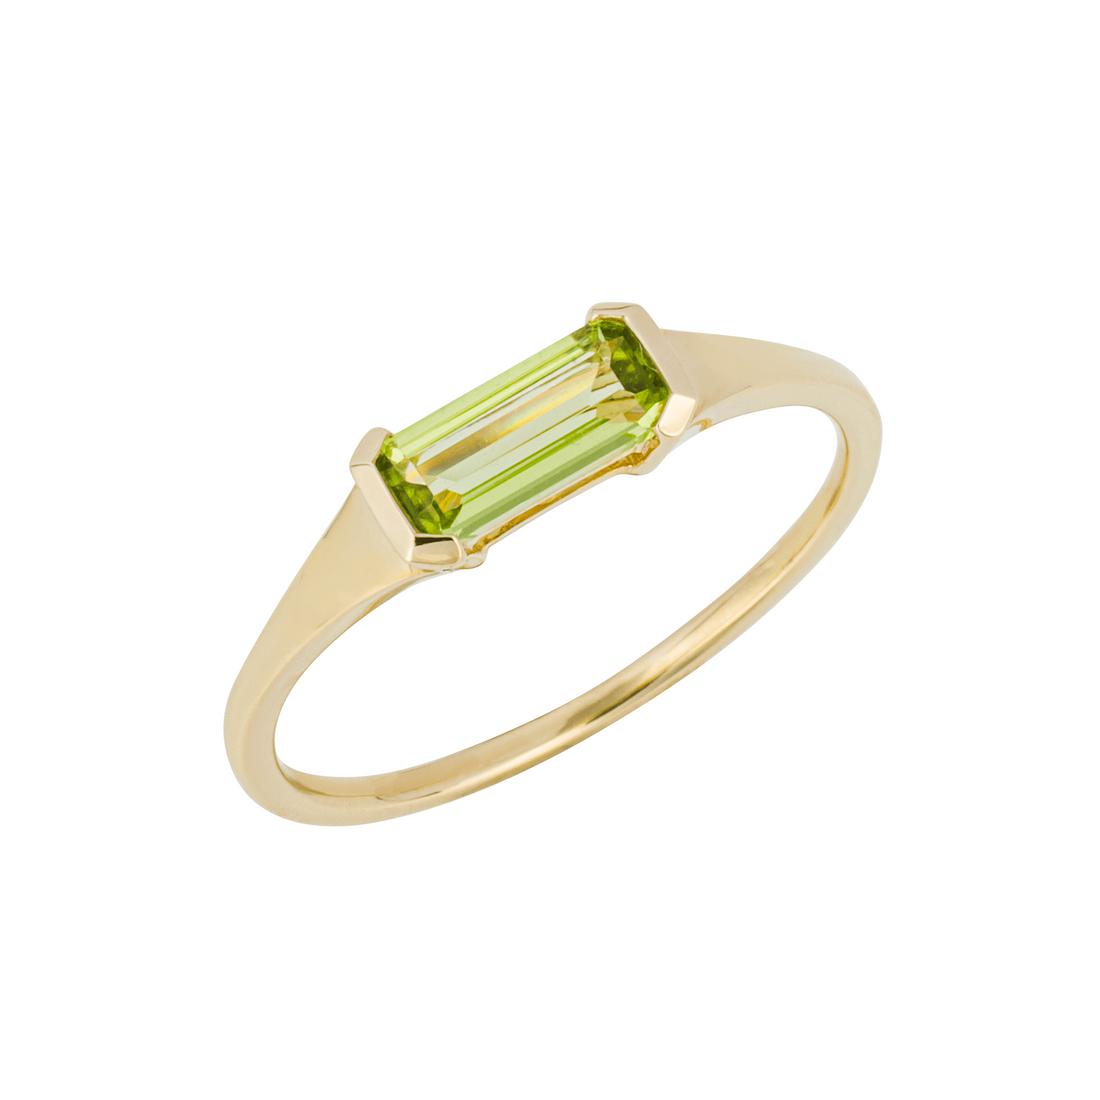 Elongated Green Peridot Ring in 9ct Yellow Gold - Robert Anthony Jewellers, Edinburgh